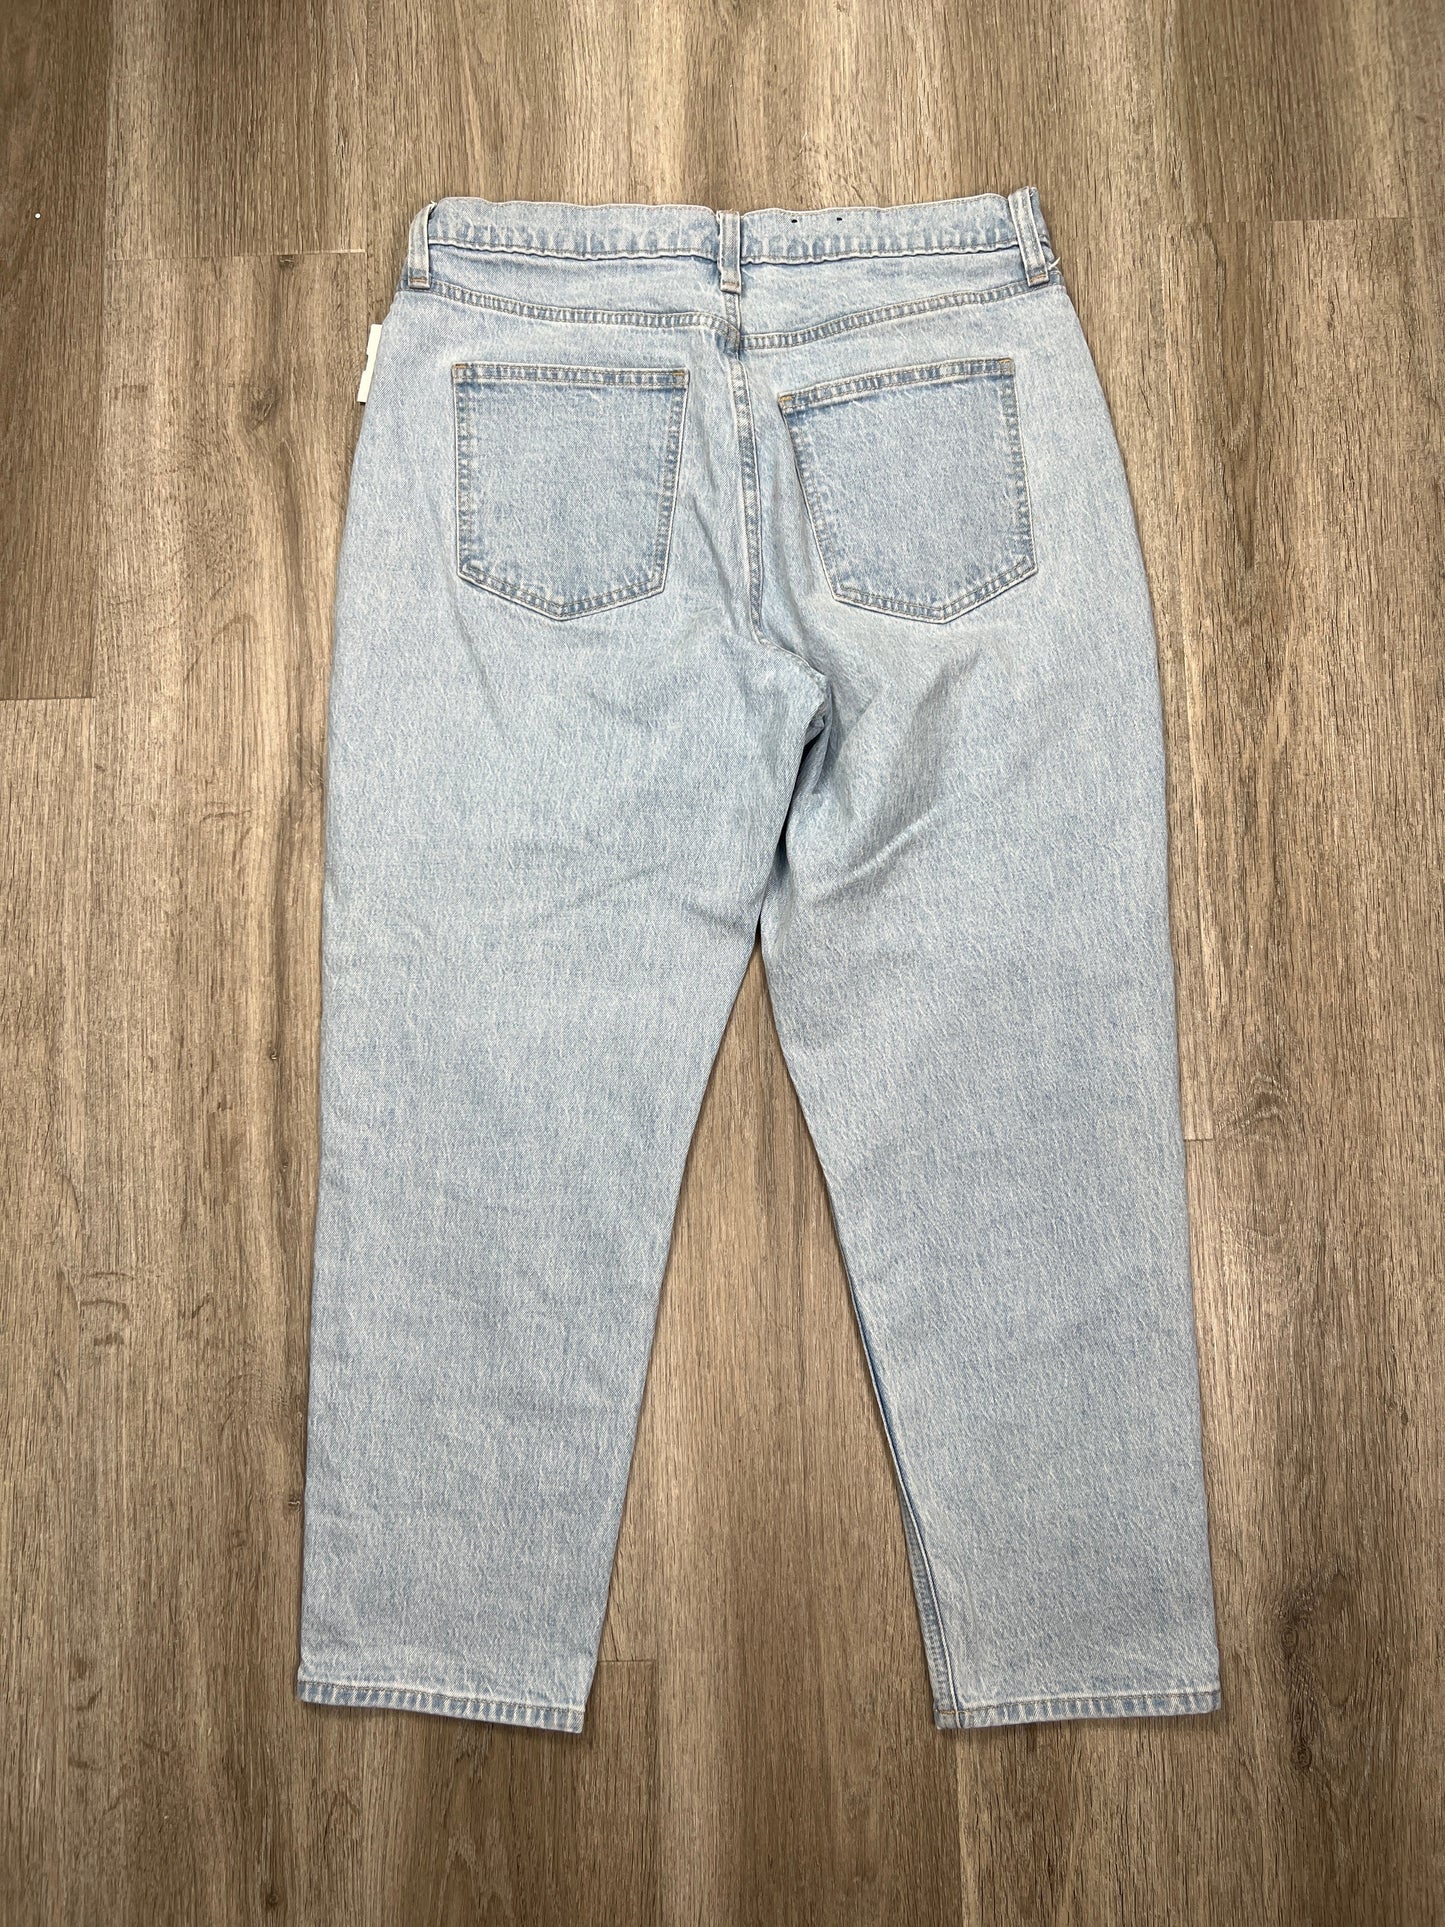 Blue Denim Jeans Boyfriend Gap, Size 12